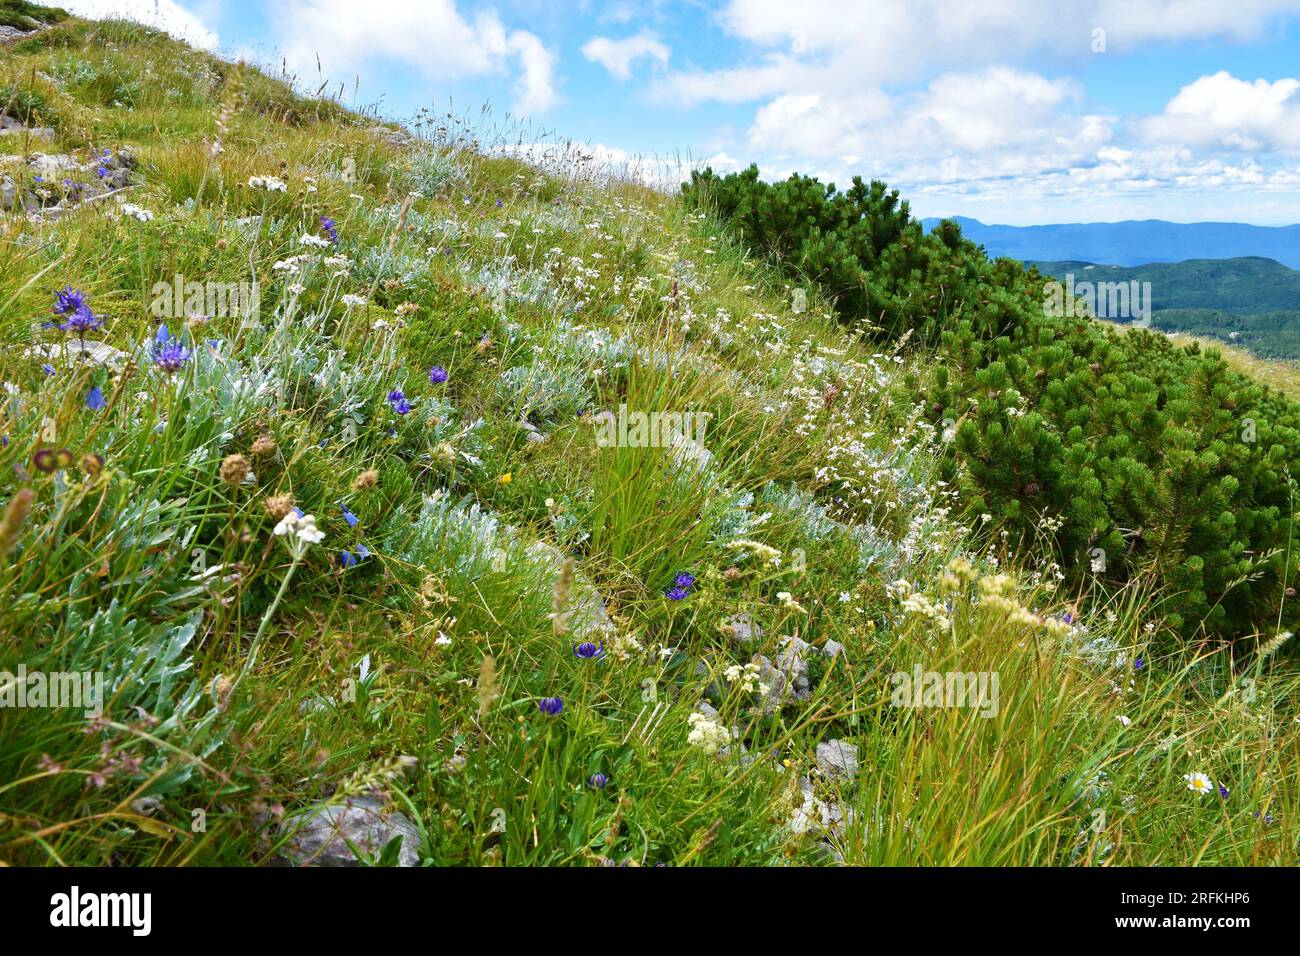 Alpine meadow with white yarrow (Achillea) and blue rampion (Phyteuma hemisphaericum) flowers at Sneznik mountain in Notranjska, Slovenia Stock Photo